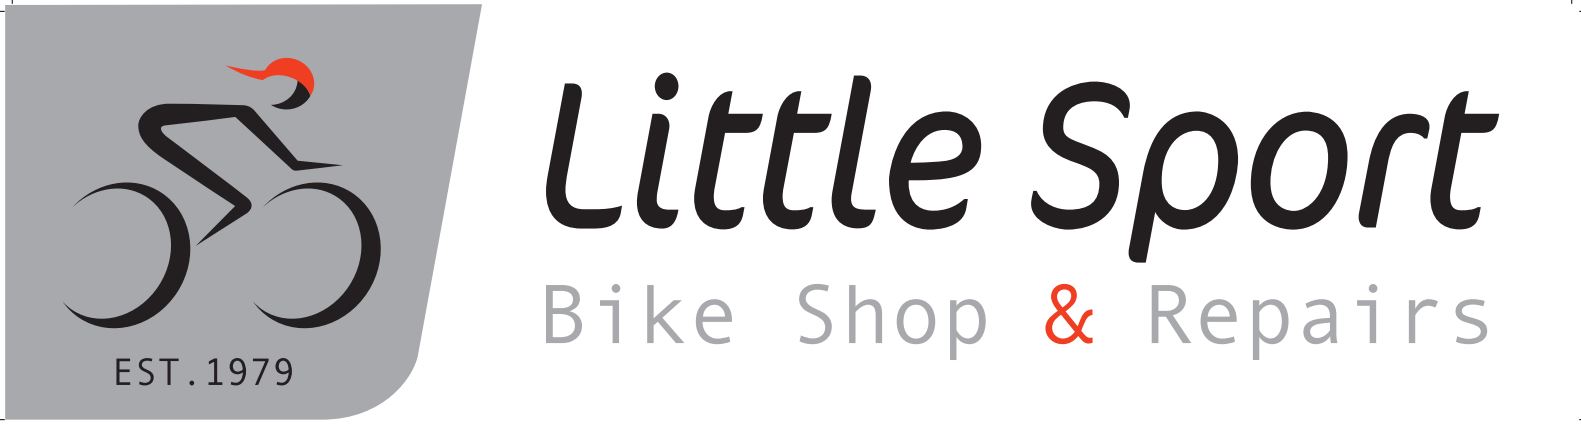 Little Sport Bikes